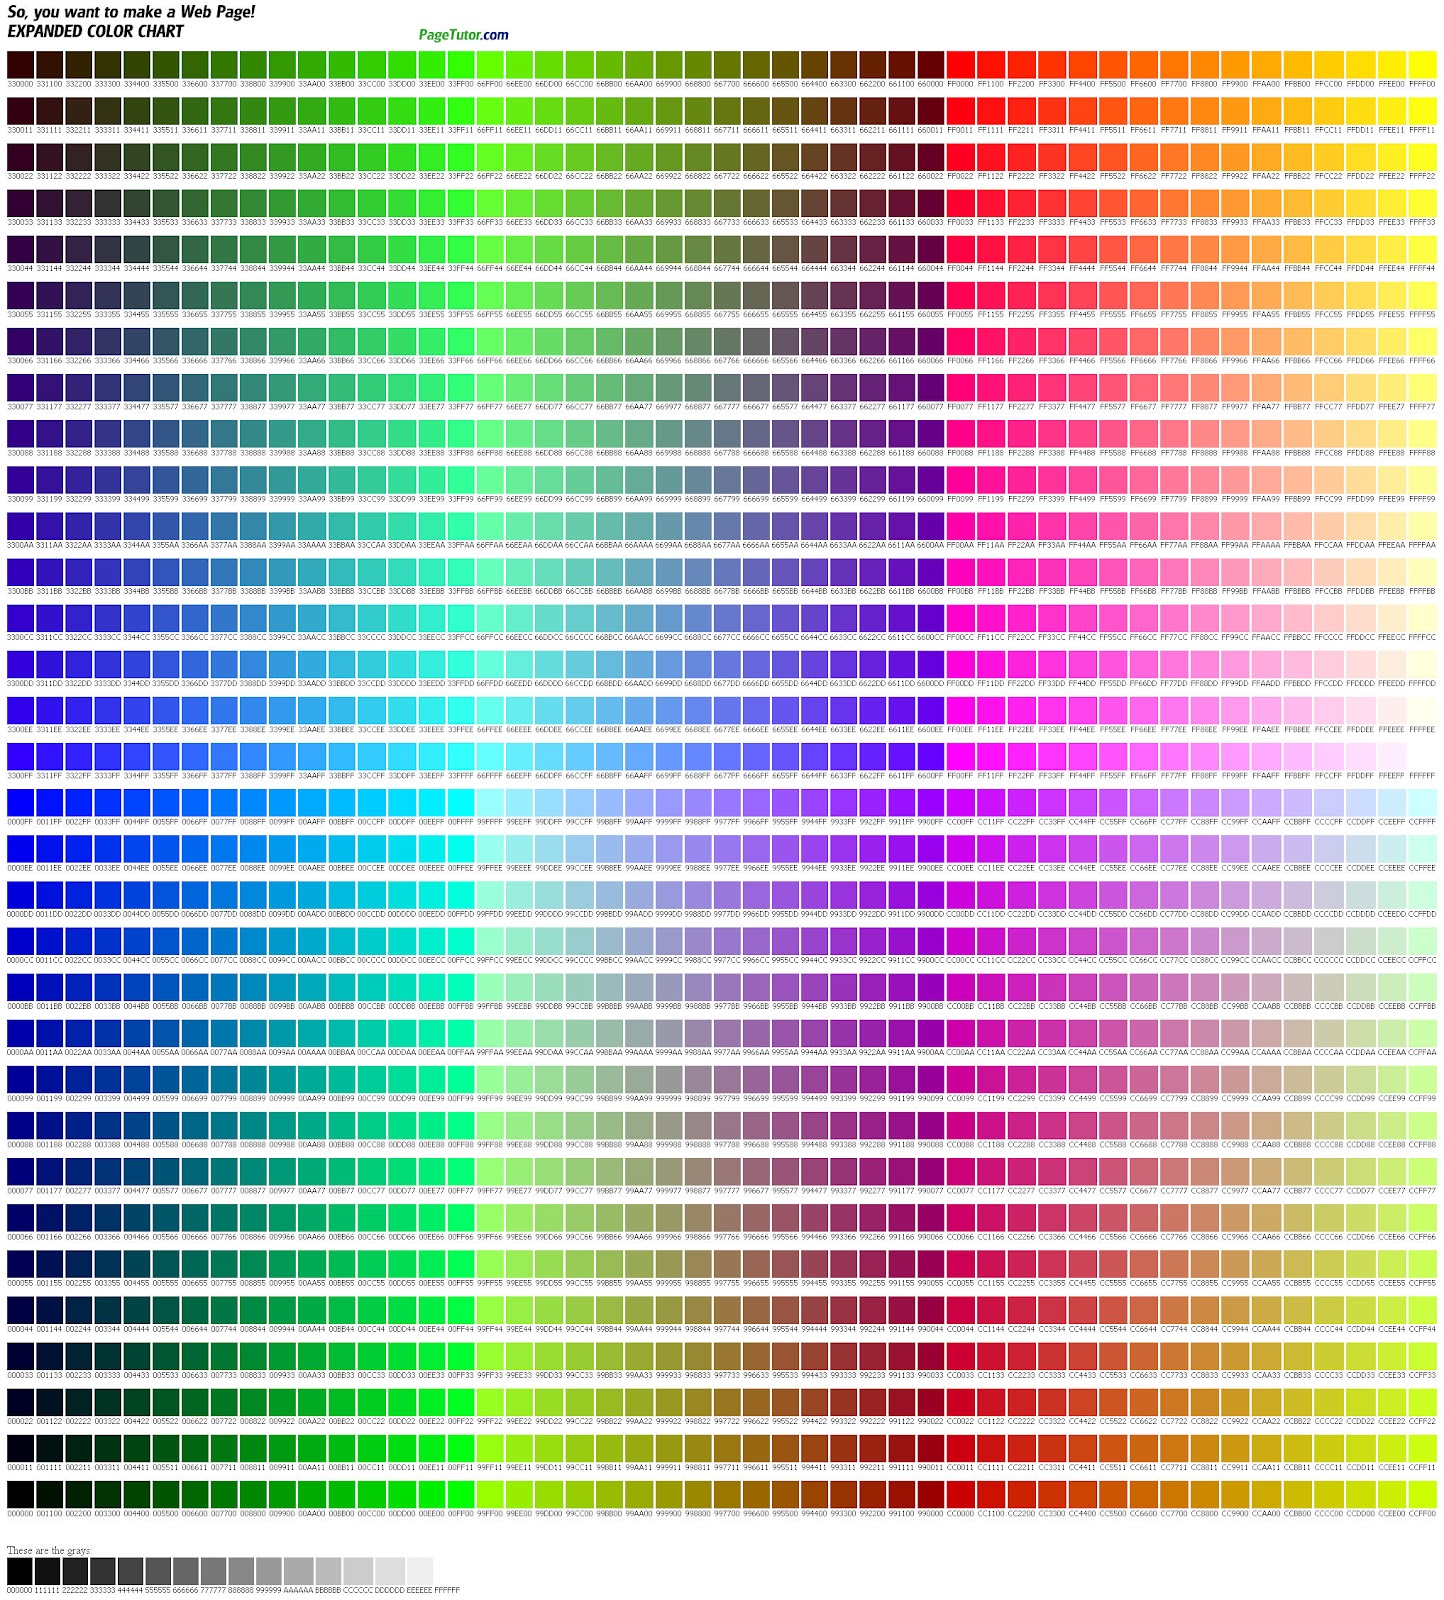 Hexadecimal Colors Coloring Wallpapers Download Free Images Wallpaper [coloring654.blogspot.com]